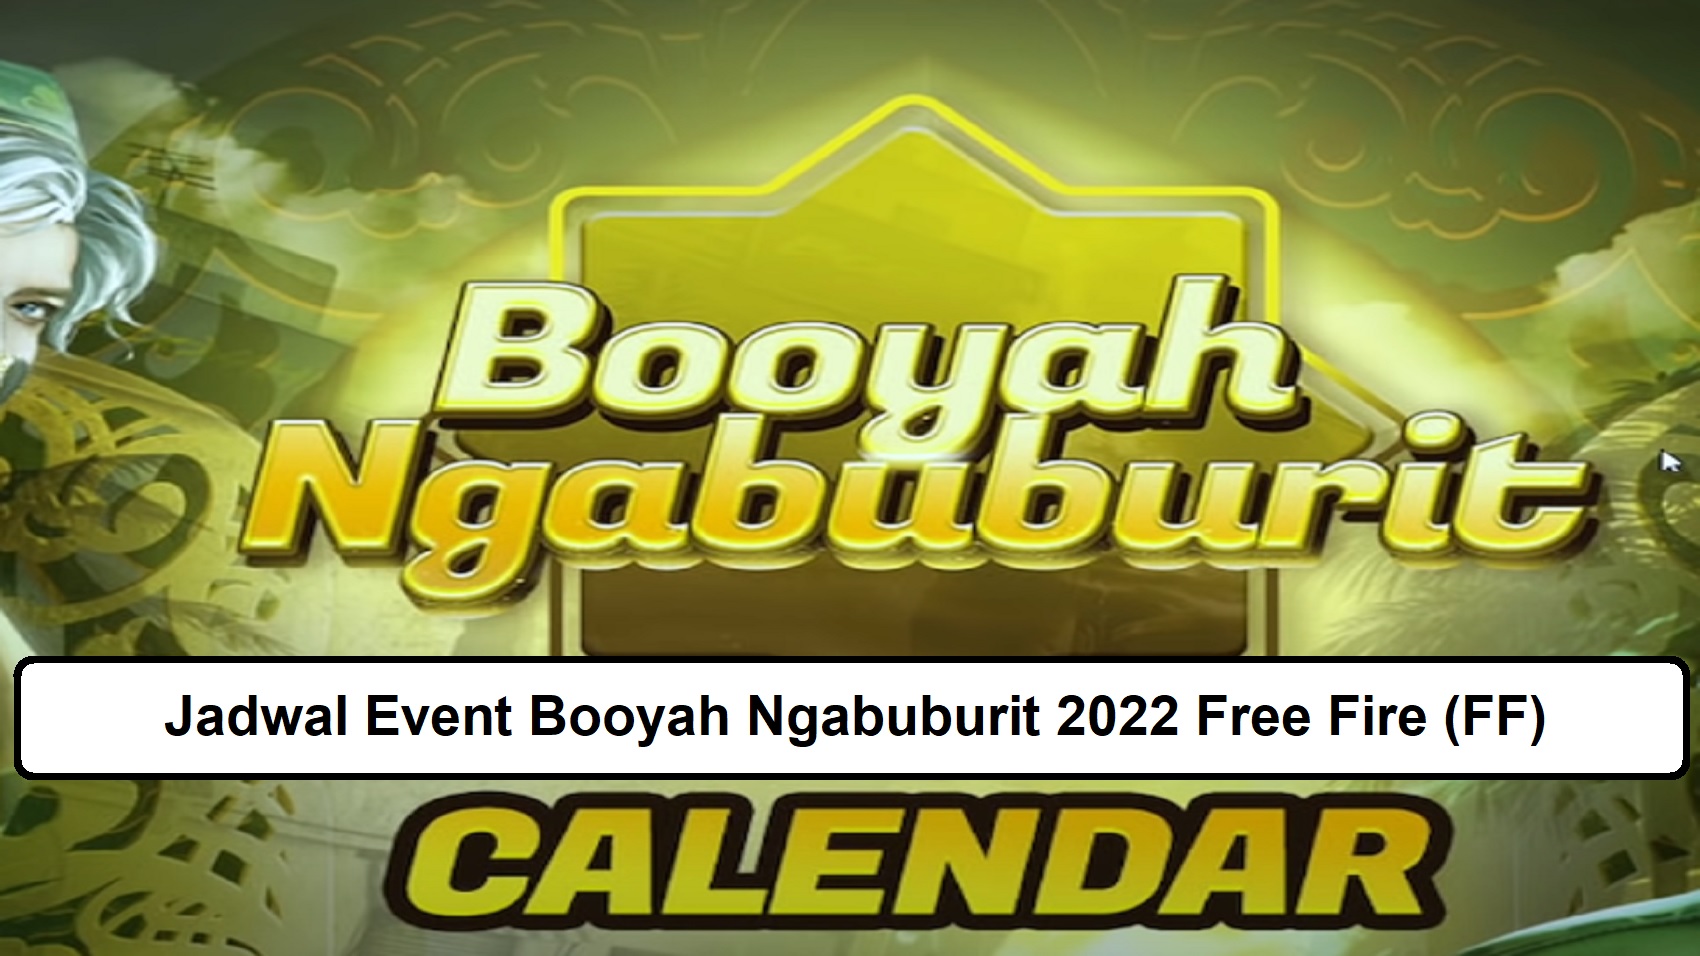 Jadwal Event Booyah Ngabuburit 2022 Free Fire (FF)